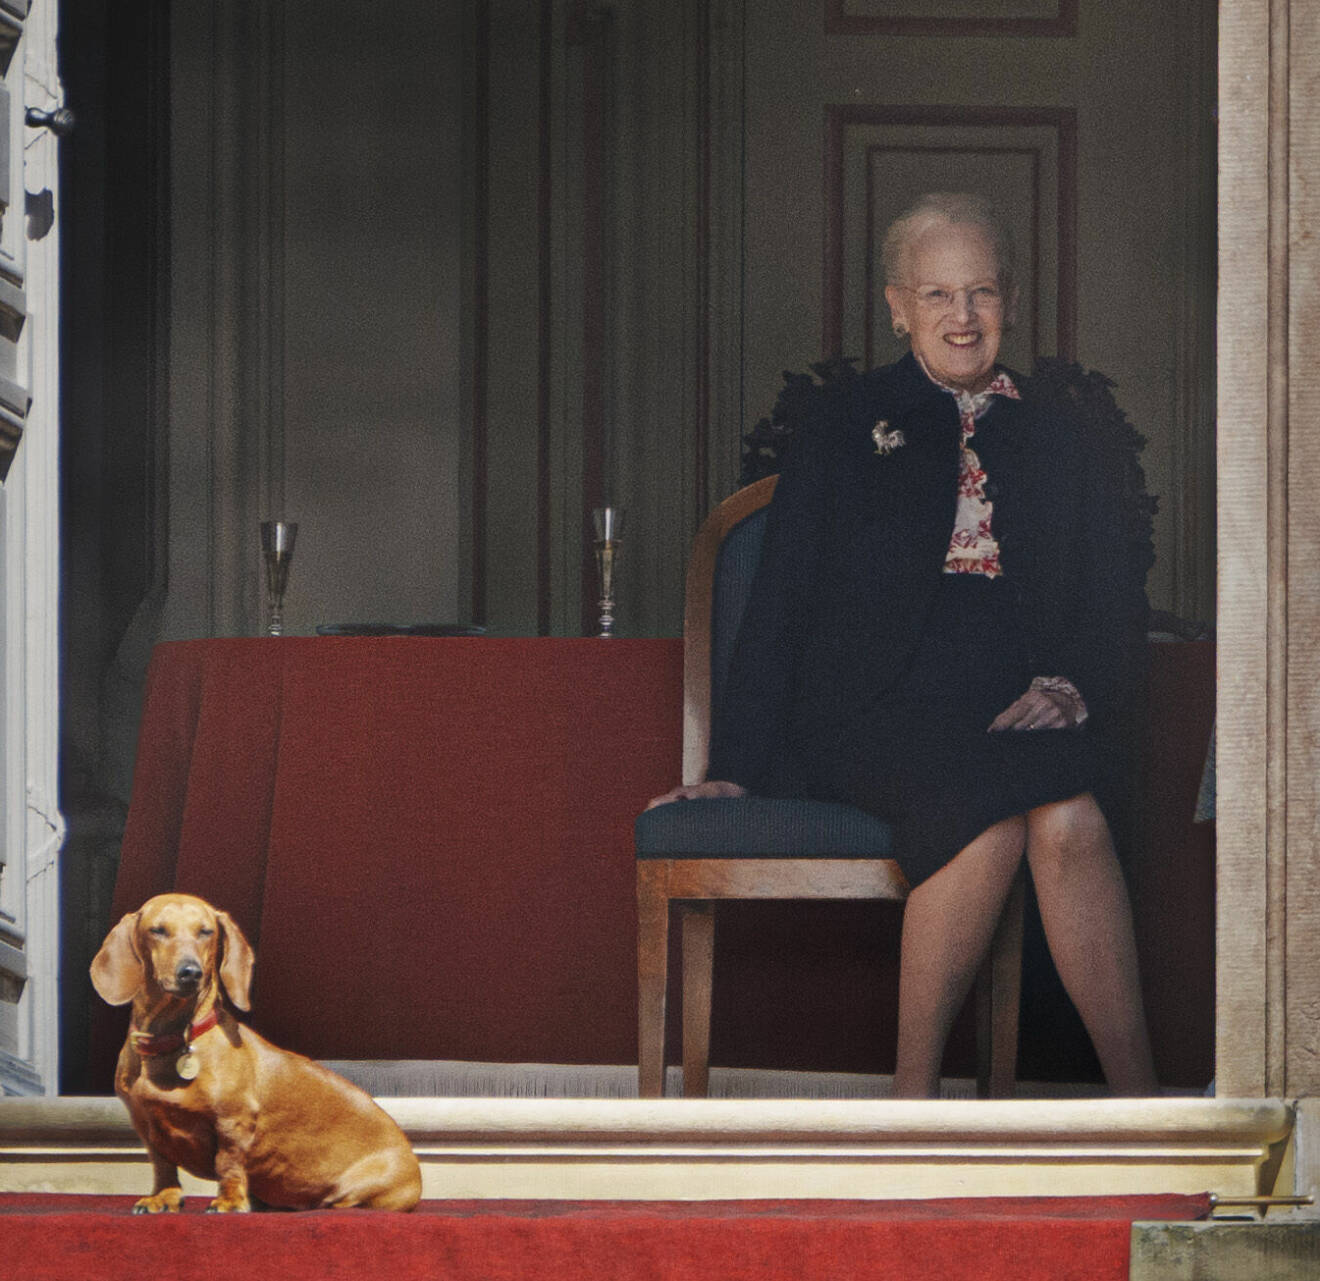 Drottning Margrethe med sin tax Tilia vid födelsedagsfirandet på slottet Fredensborg